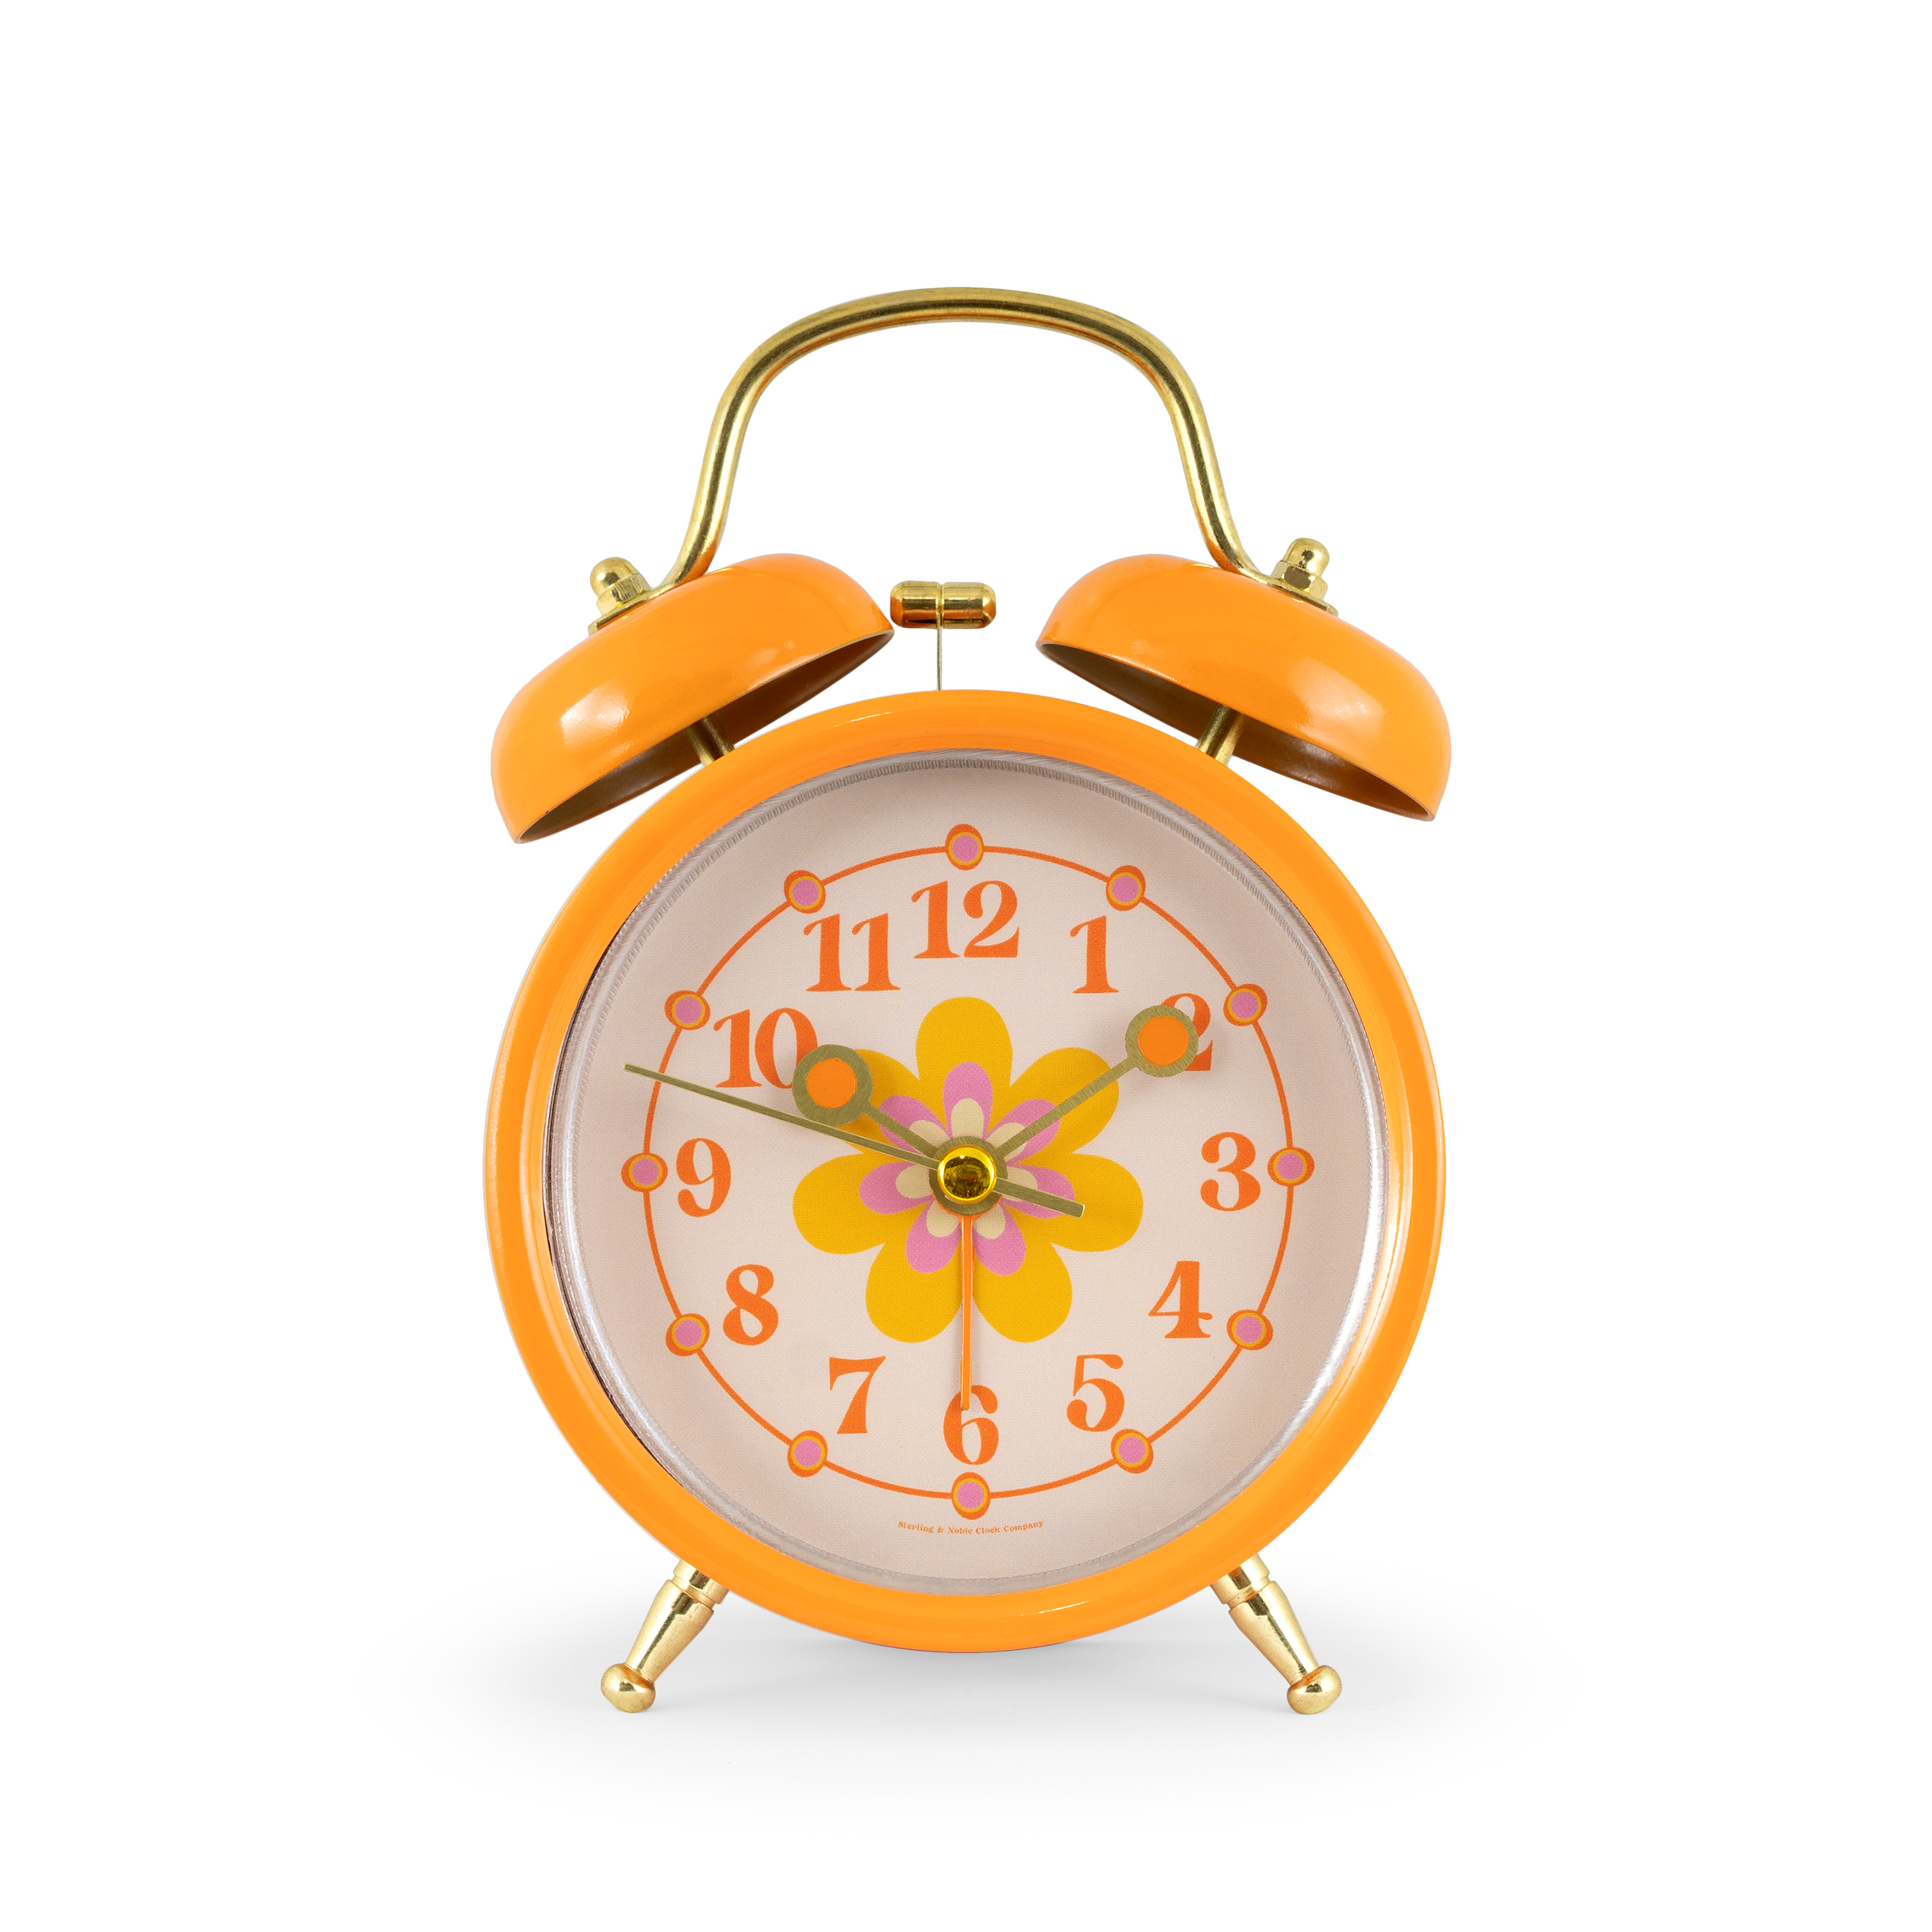 Mainstays Mini Floral Indoor Vintage Groovy Style Orange Table Top Analog Alarm Clock - image 1 of 5